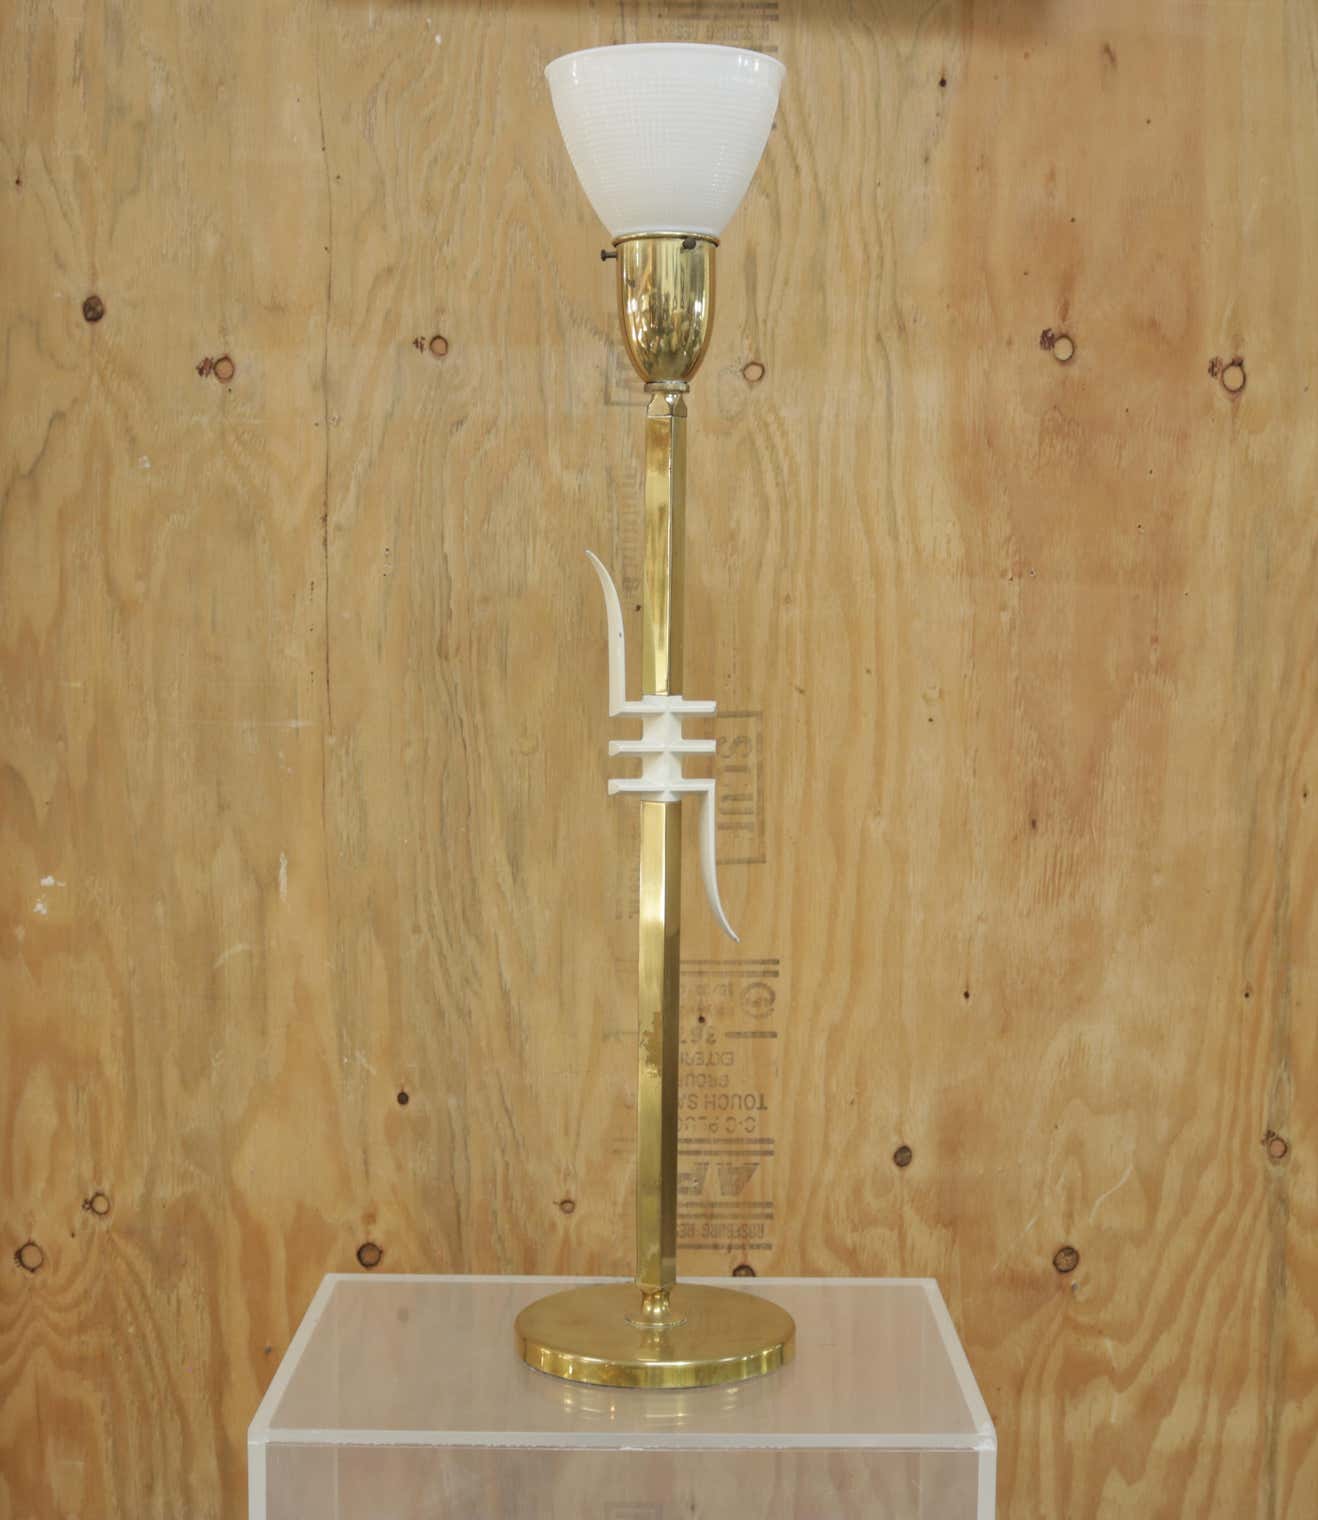 Sculptural Midcentury Table Lamp by Laurel